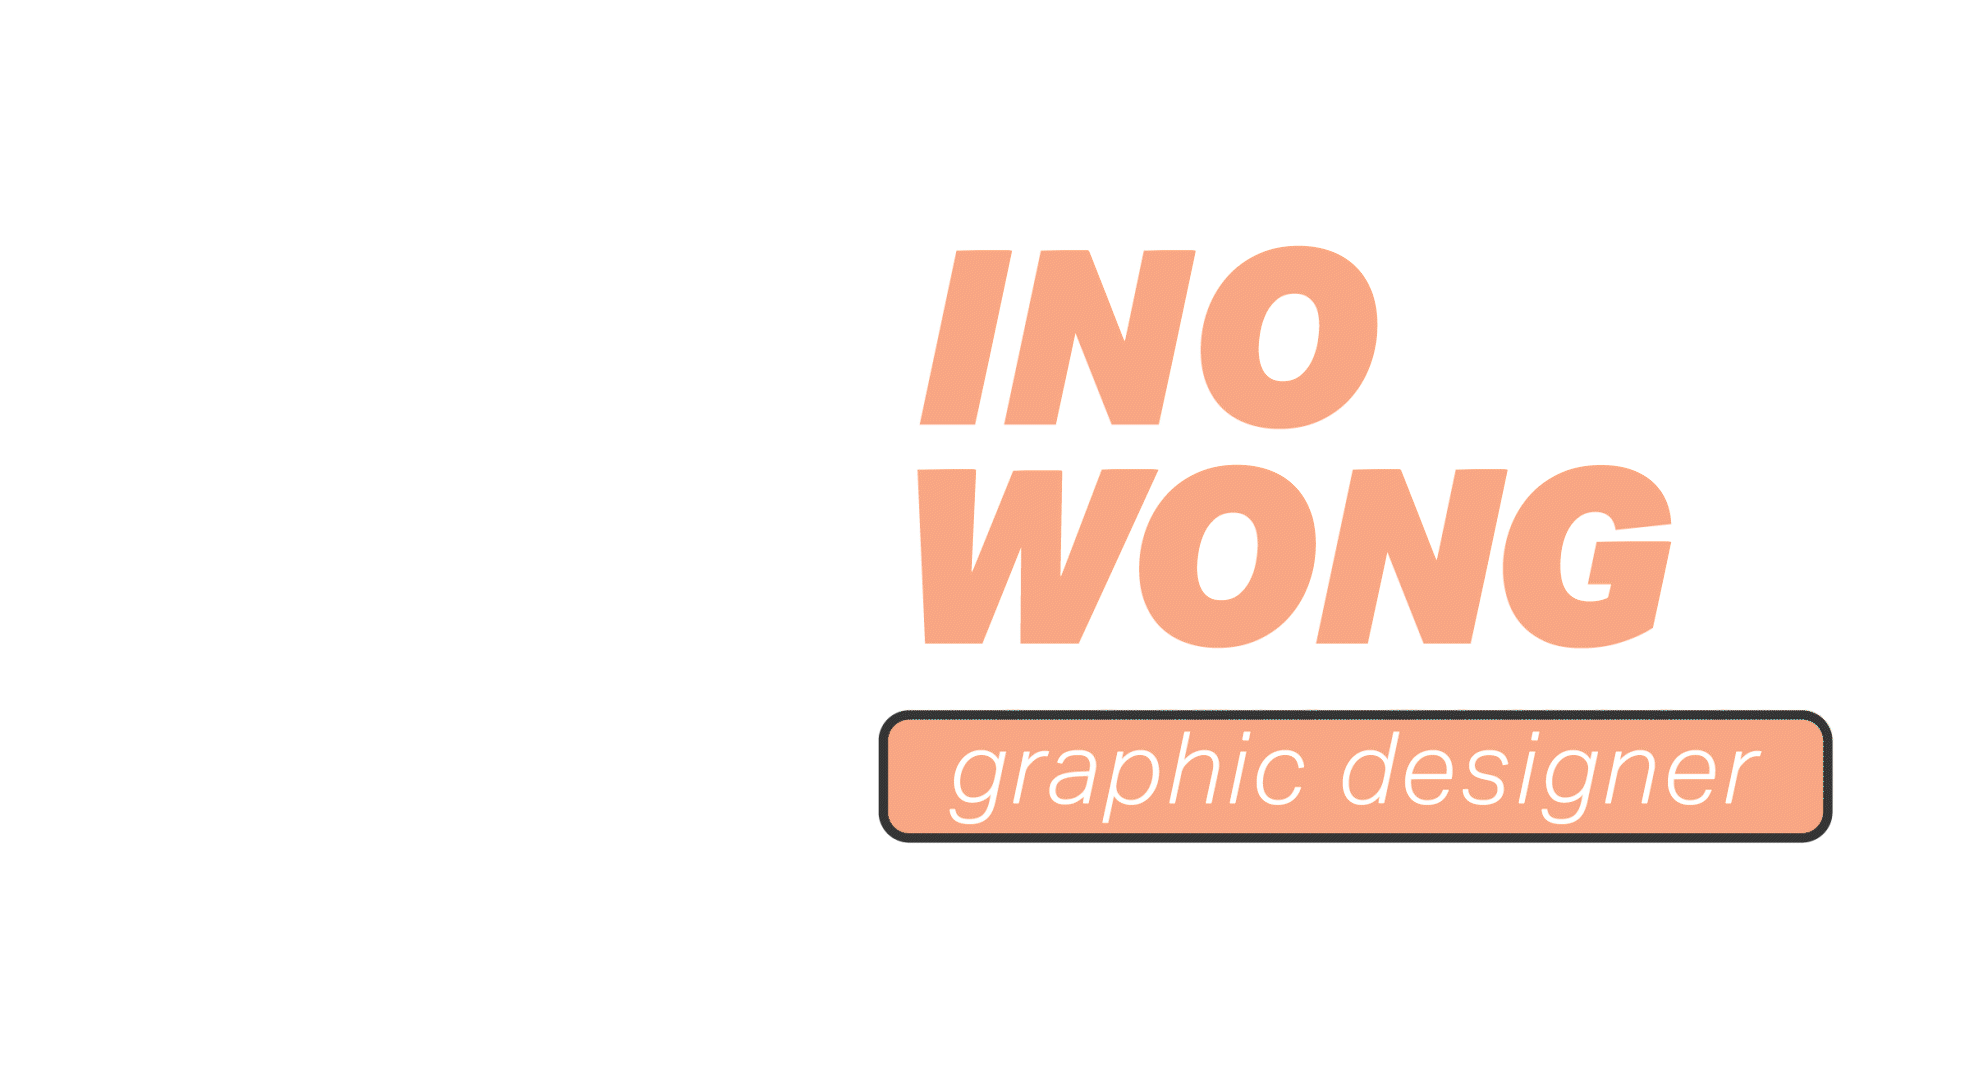 Ino Wong - Graphic Designer